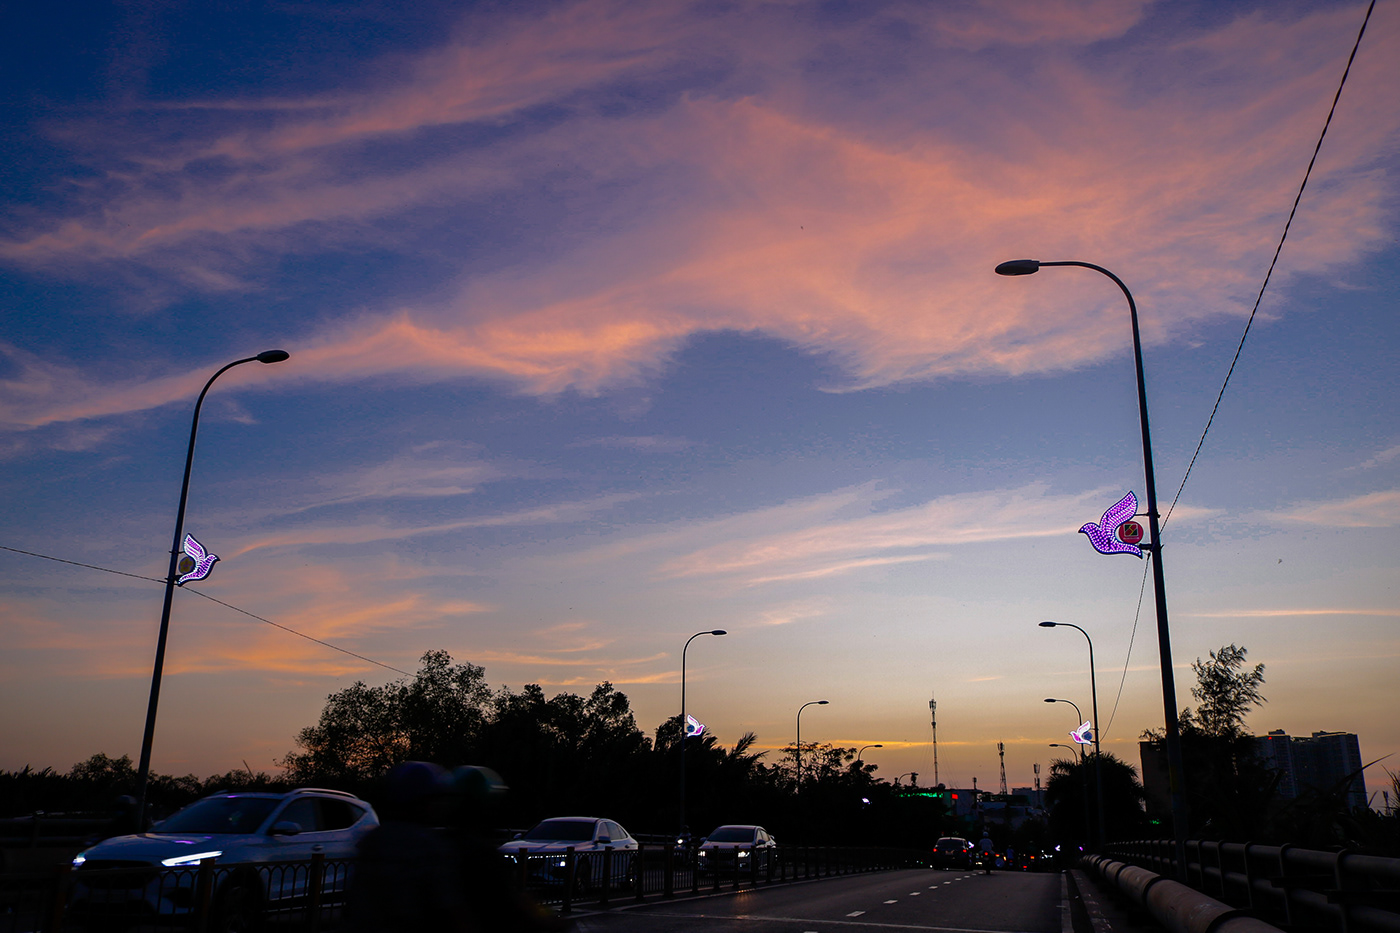 SKY Photography  Nature sunset hochiminhcity vietnam saigon street photography